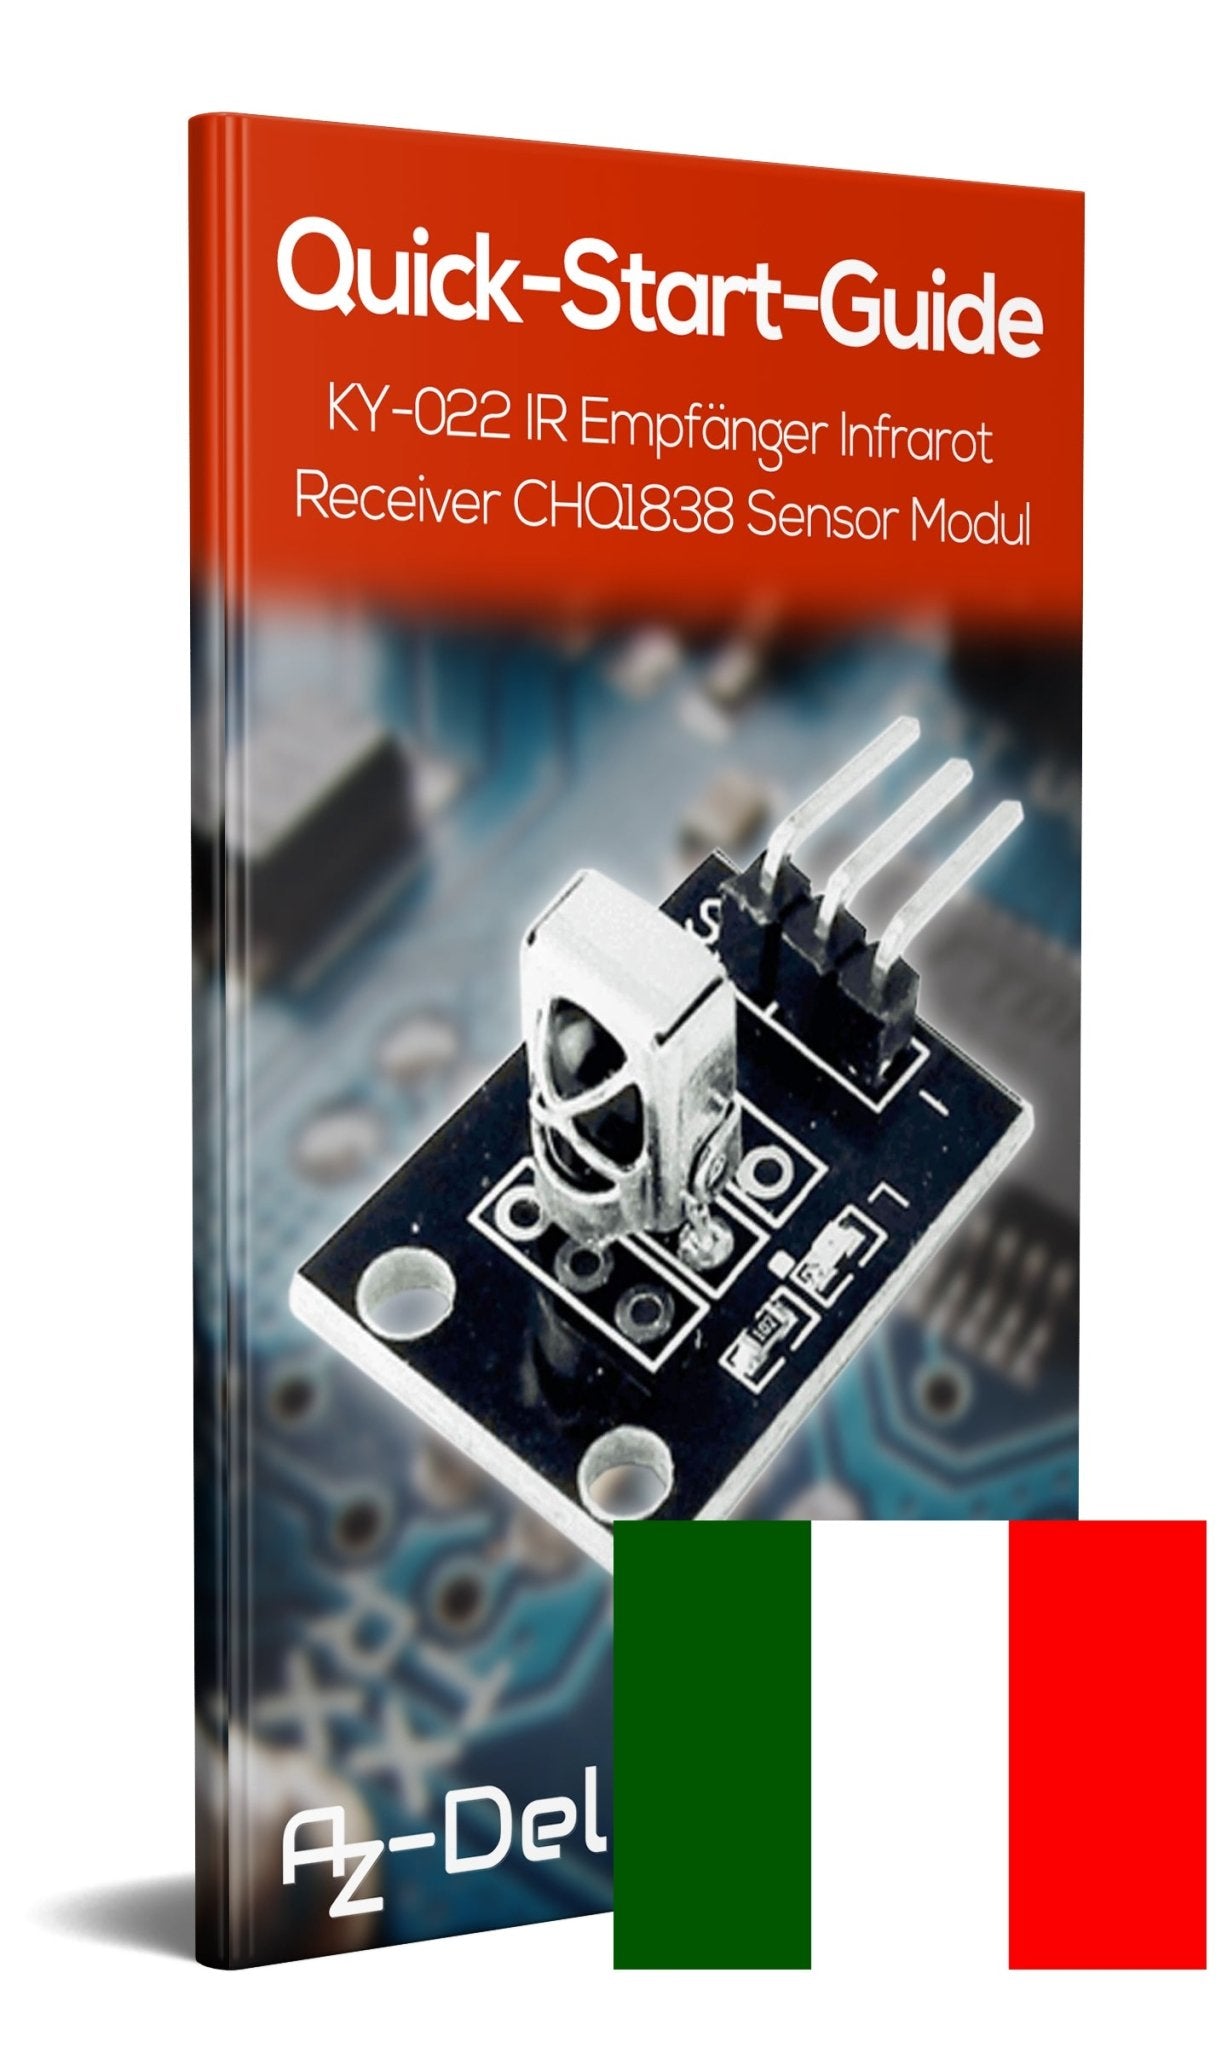 KY-022 Set IR Empfänger Infrarot Receiver CHQ1838 Sensor Modul - AZ-Delivery